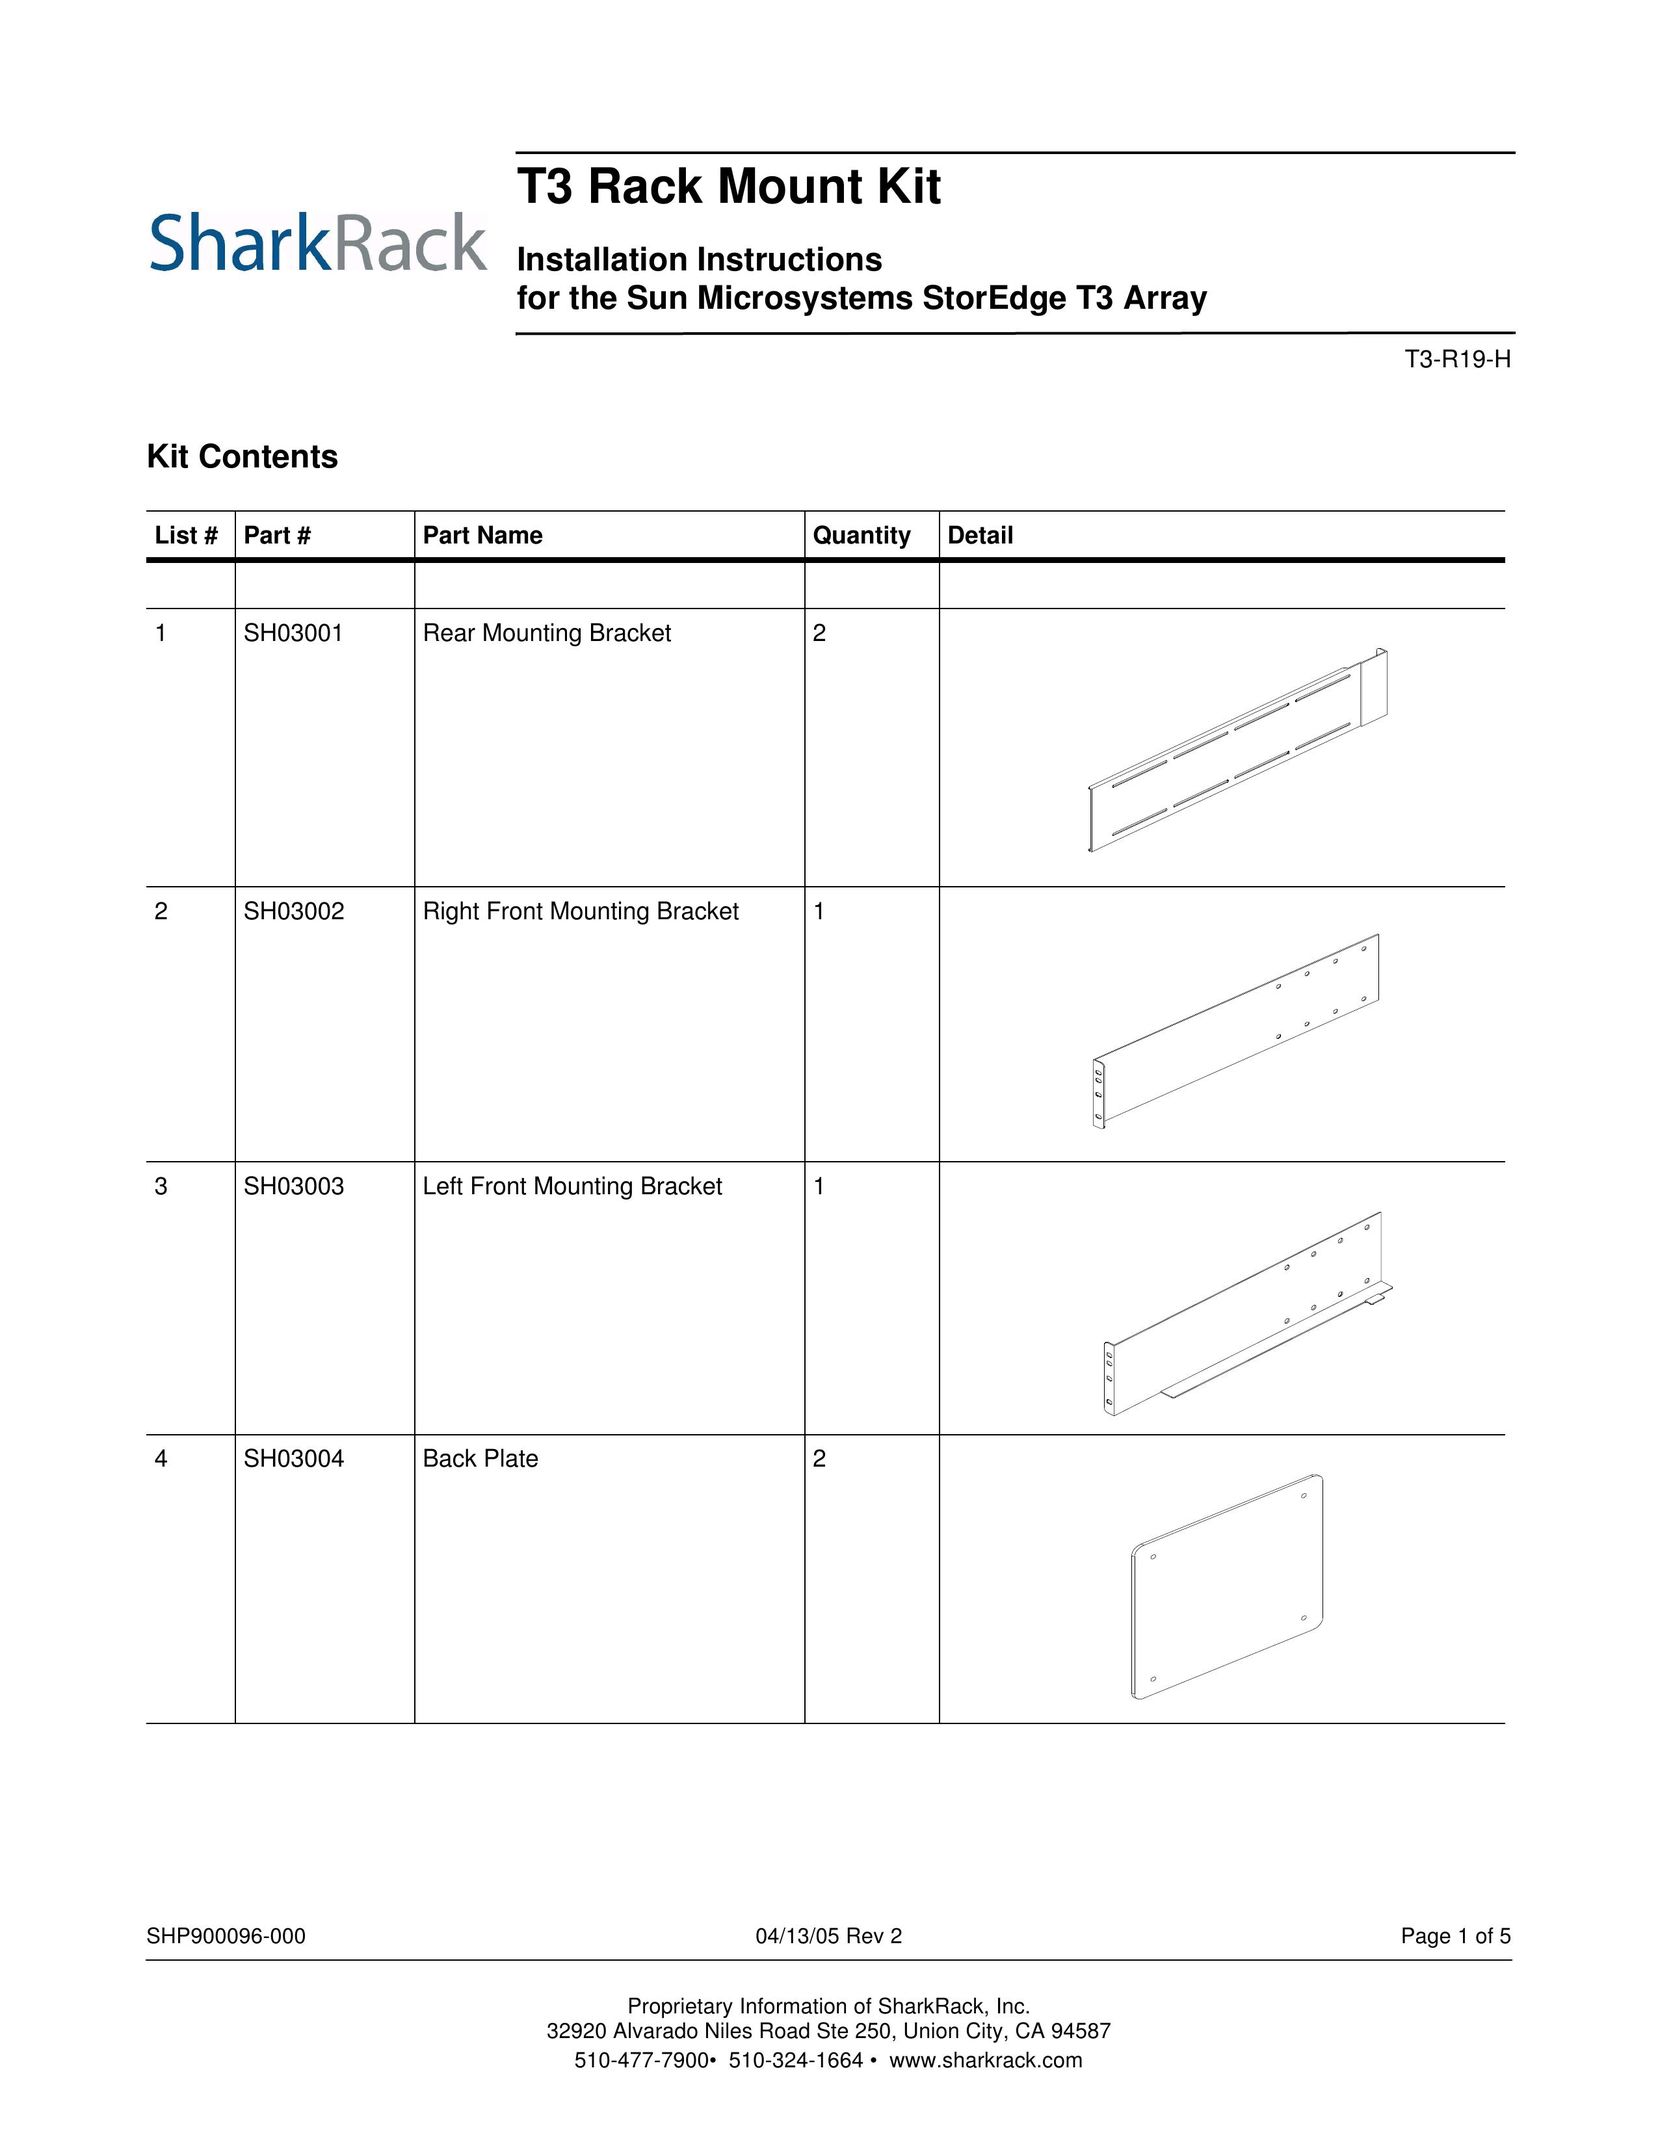 SharkRack T3-R19-H Speaker System User Manual